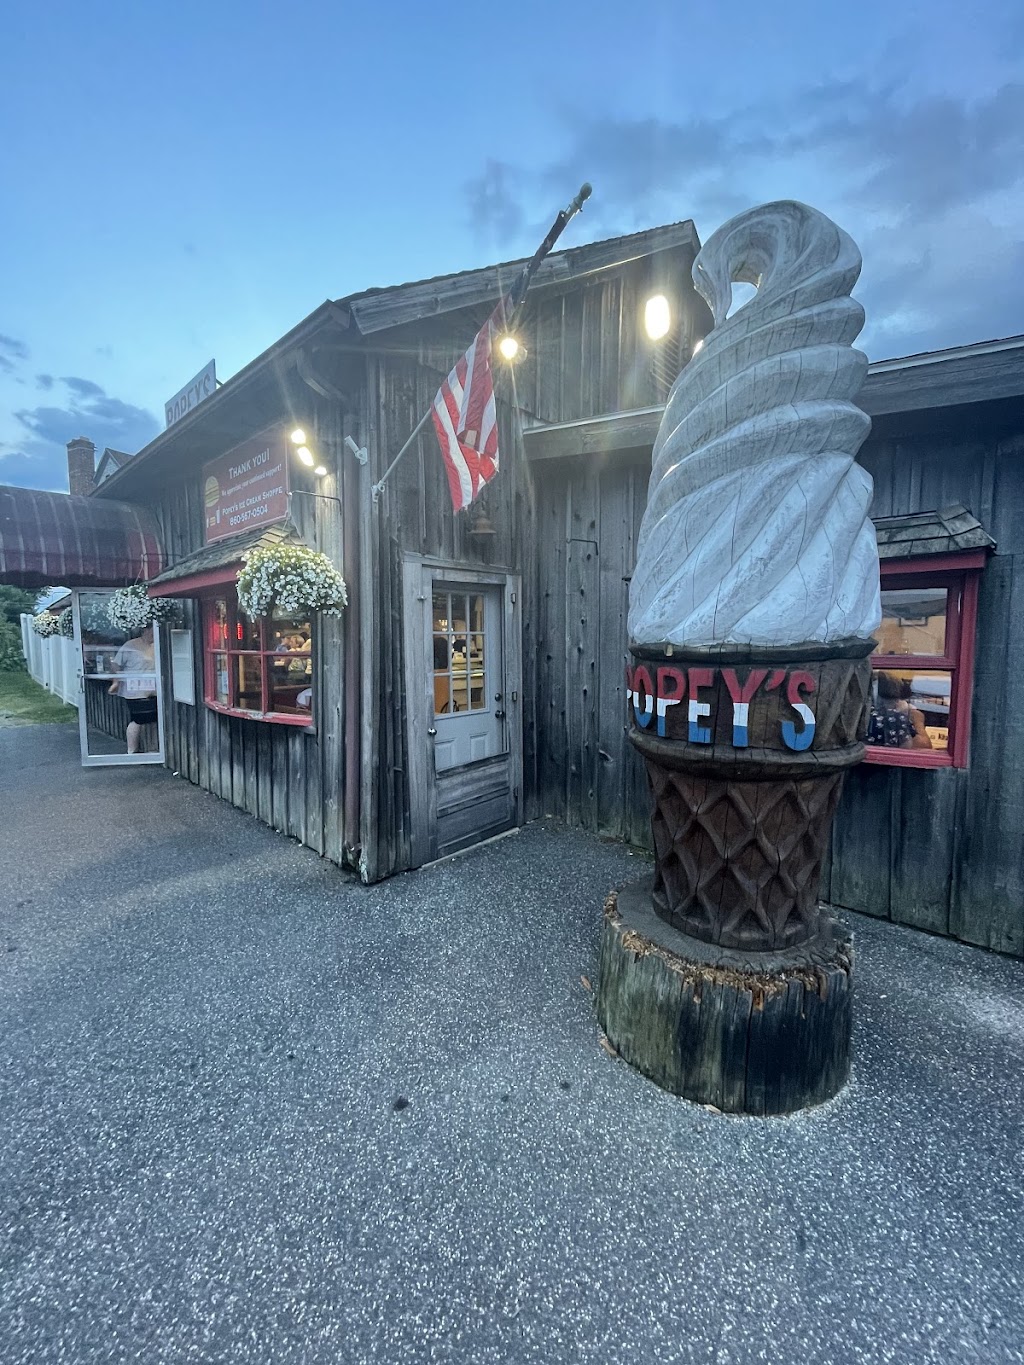 Popeys Ice Cream Shoppe | 7 West St, Morris, CT 06763 | Phone: (860) 567-0504